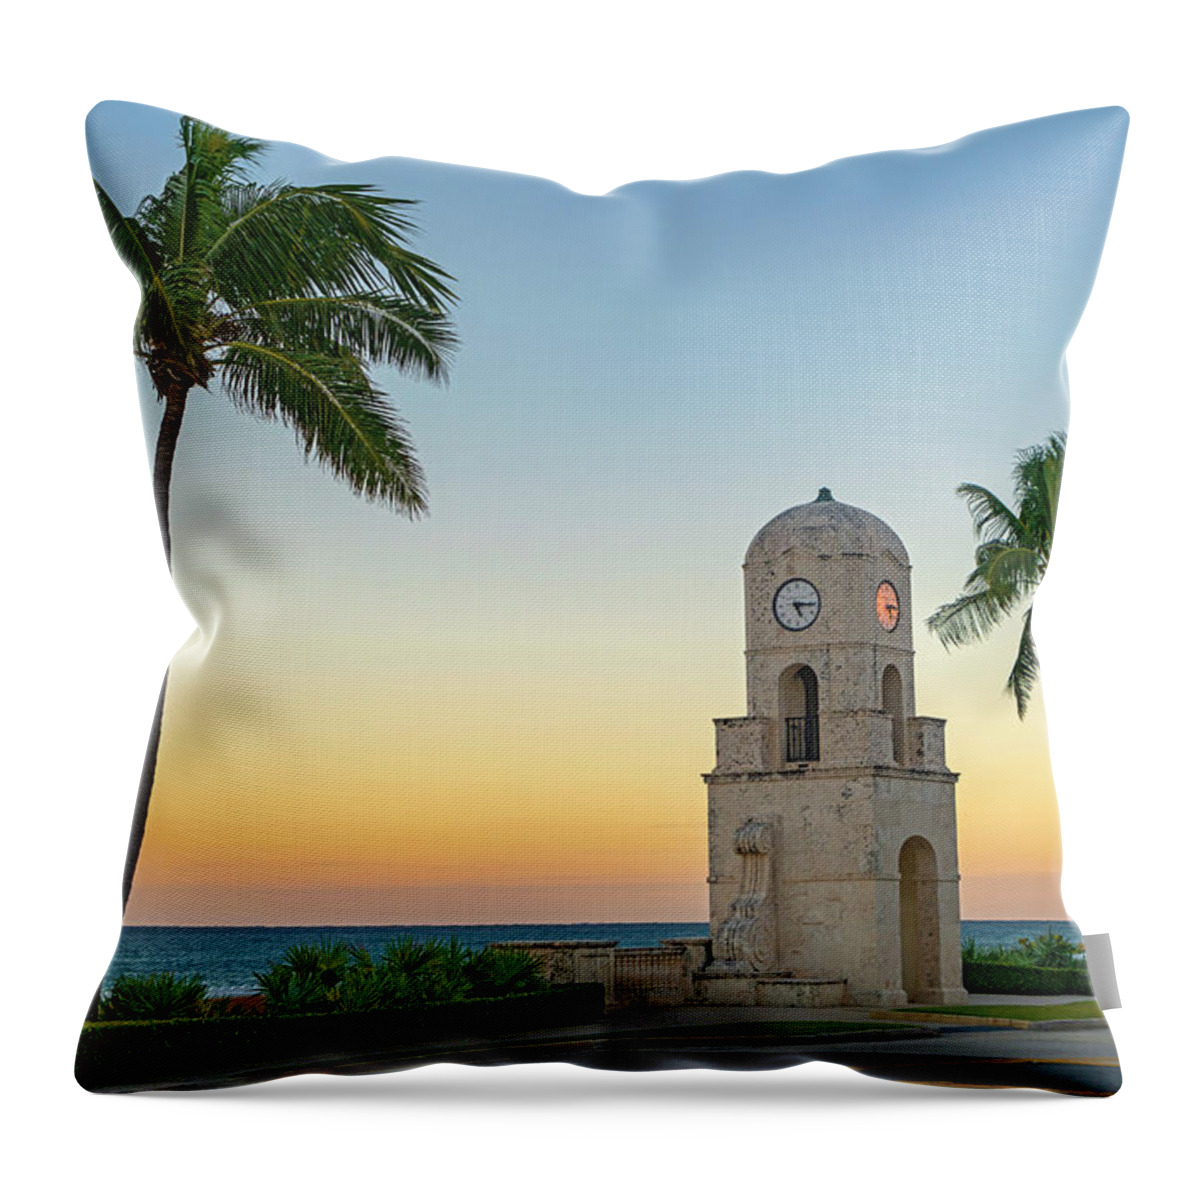 Estock Throw Pillow featuring the digital art Clock Tower In Palm Beach by Laura Zeid